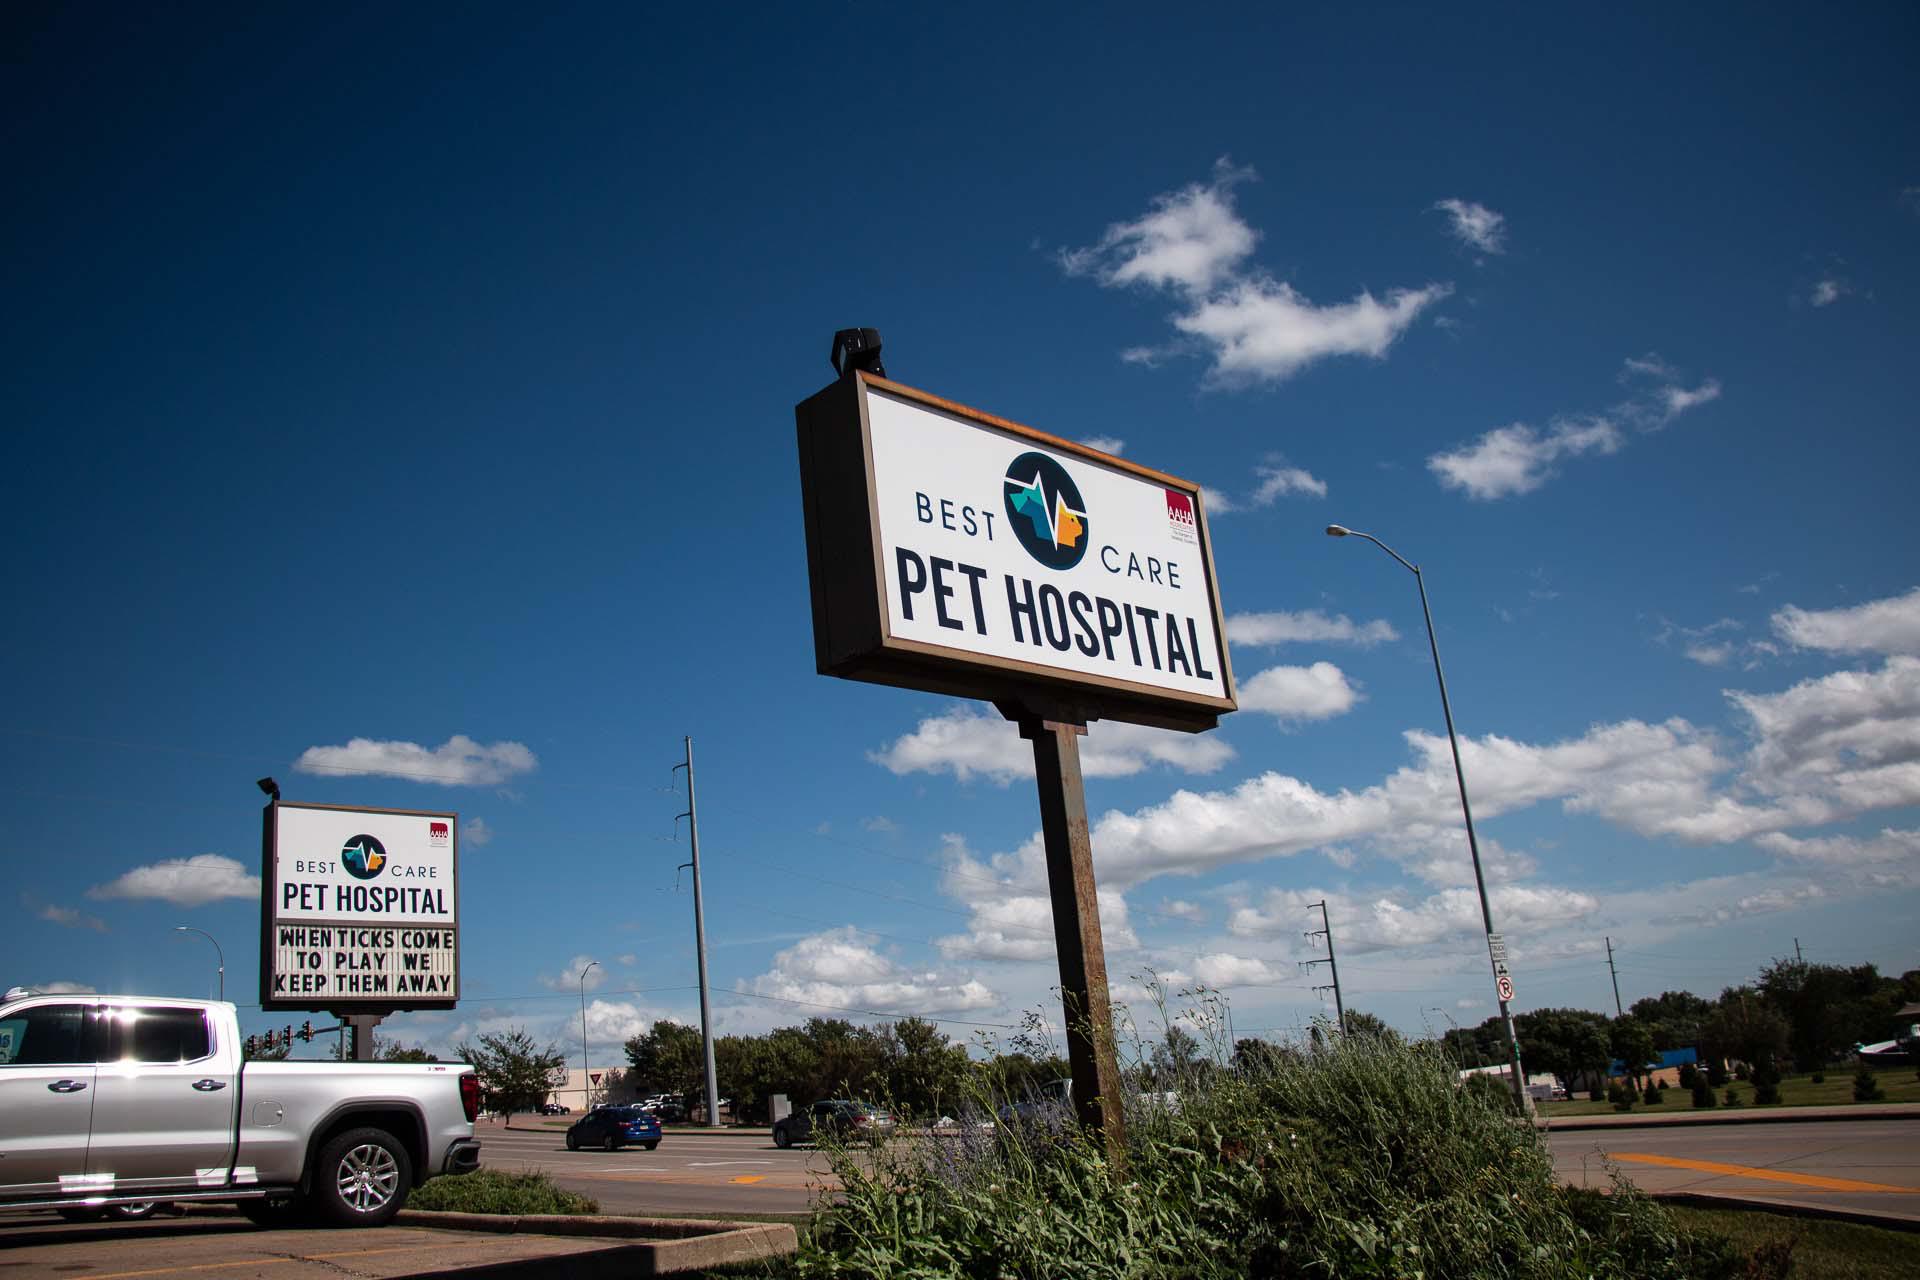 Best Care Pet Hospital